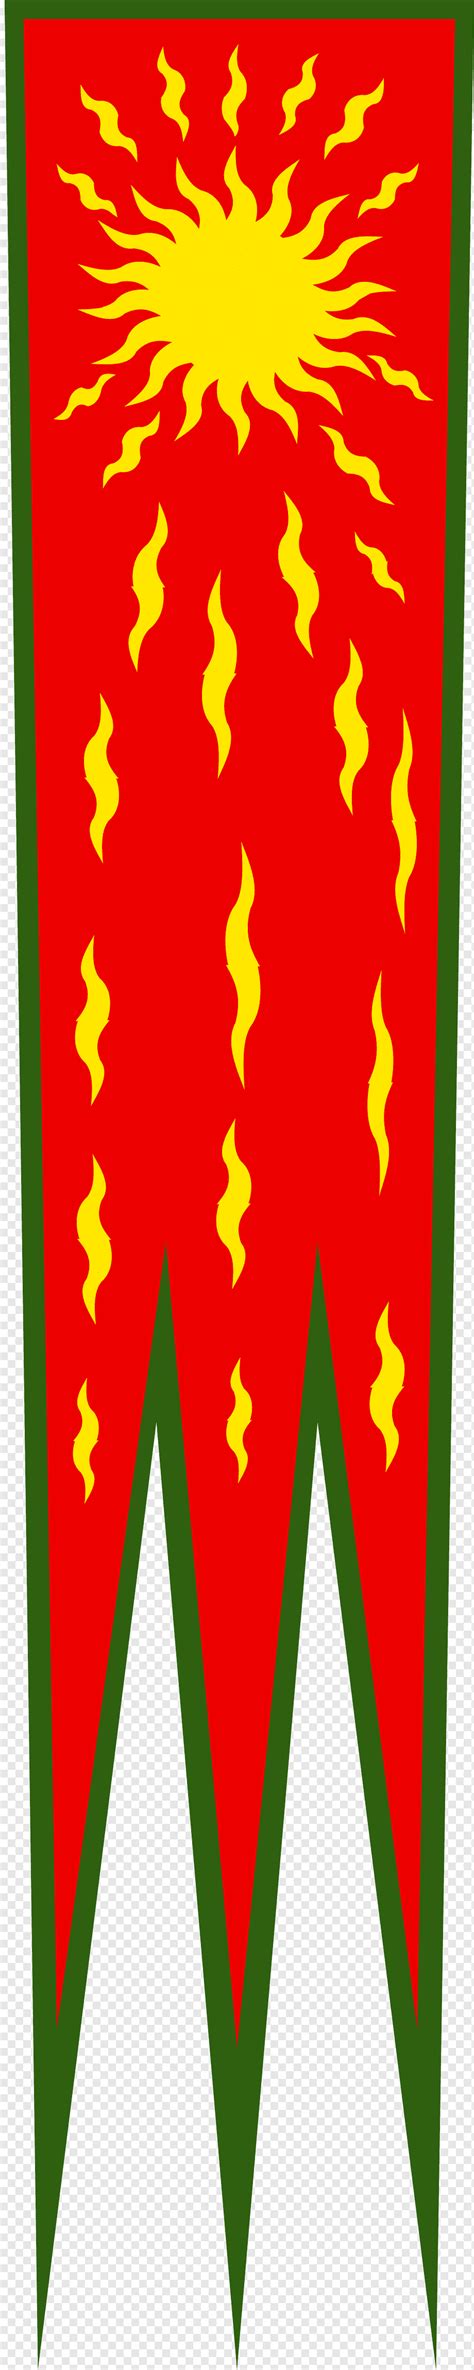 Carolingian Empire Flag